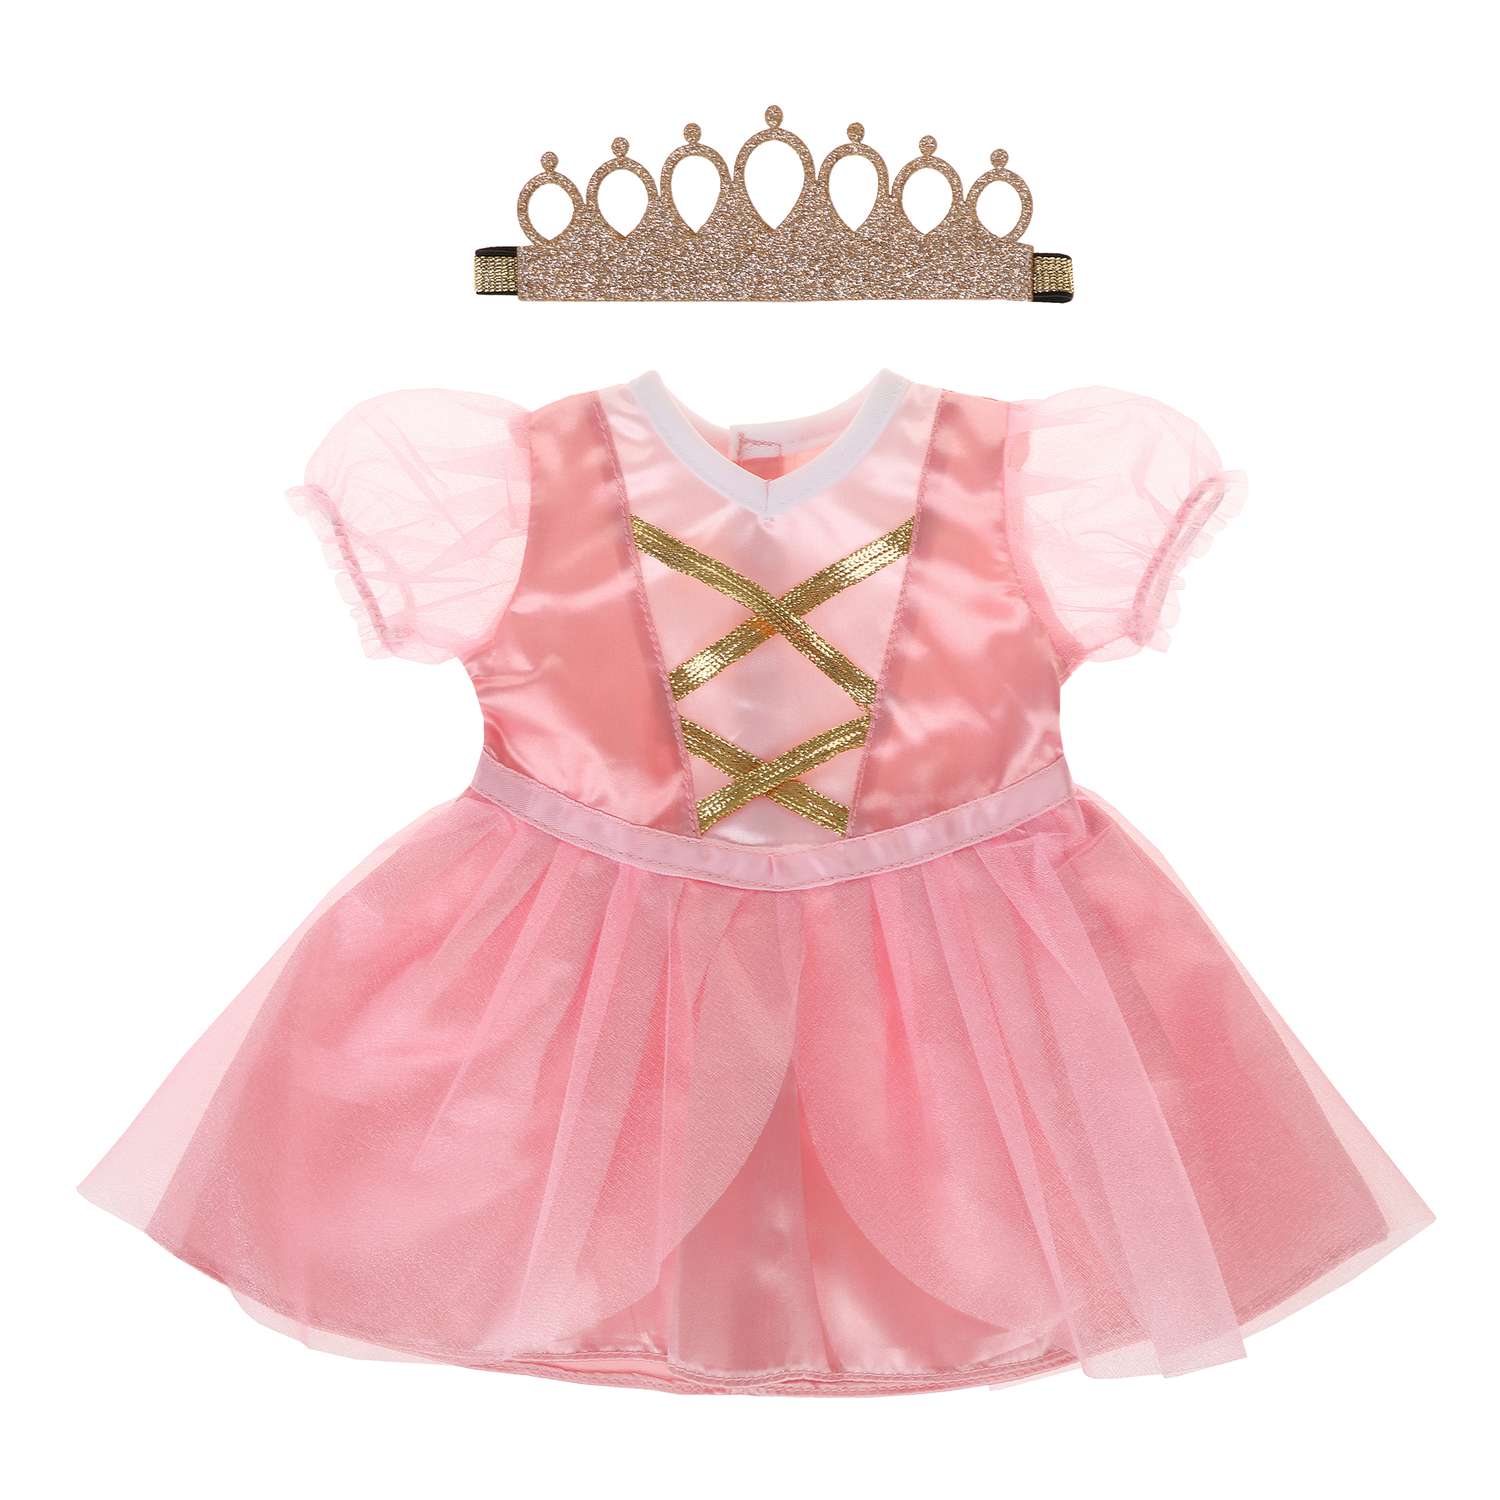 Одежда для кукол Mary Poppins платье и повязка Принцесса 452185 - фото 1